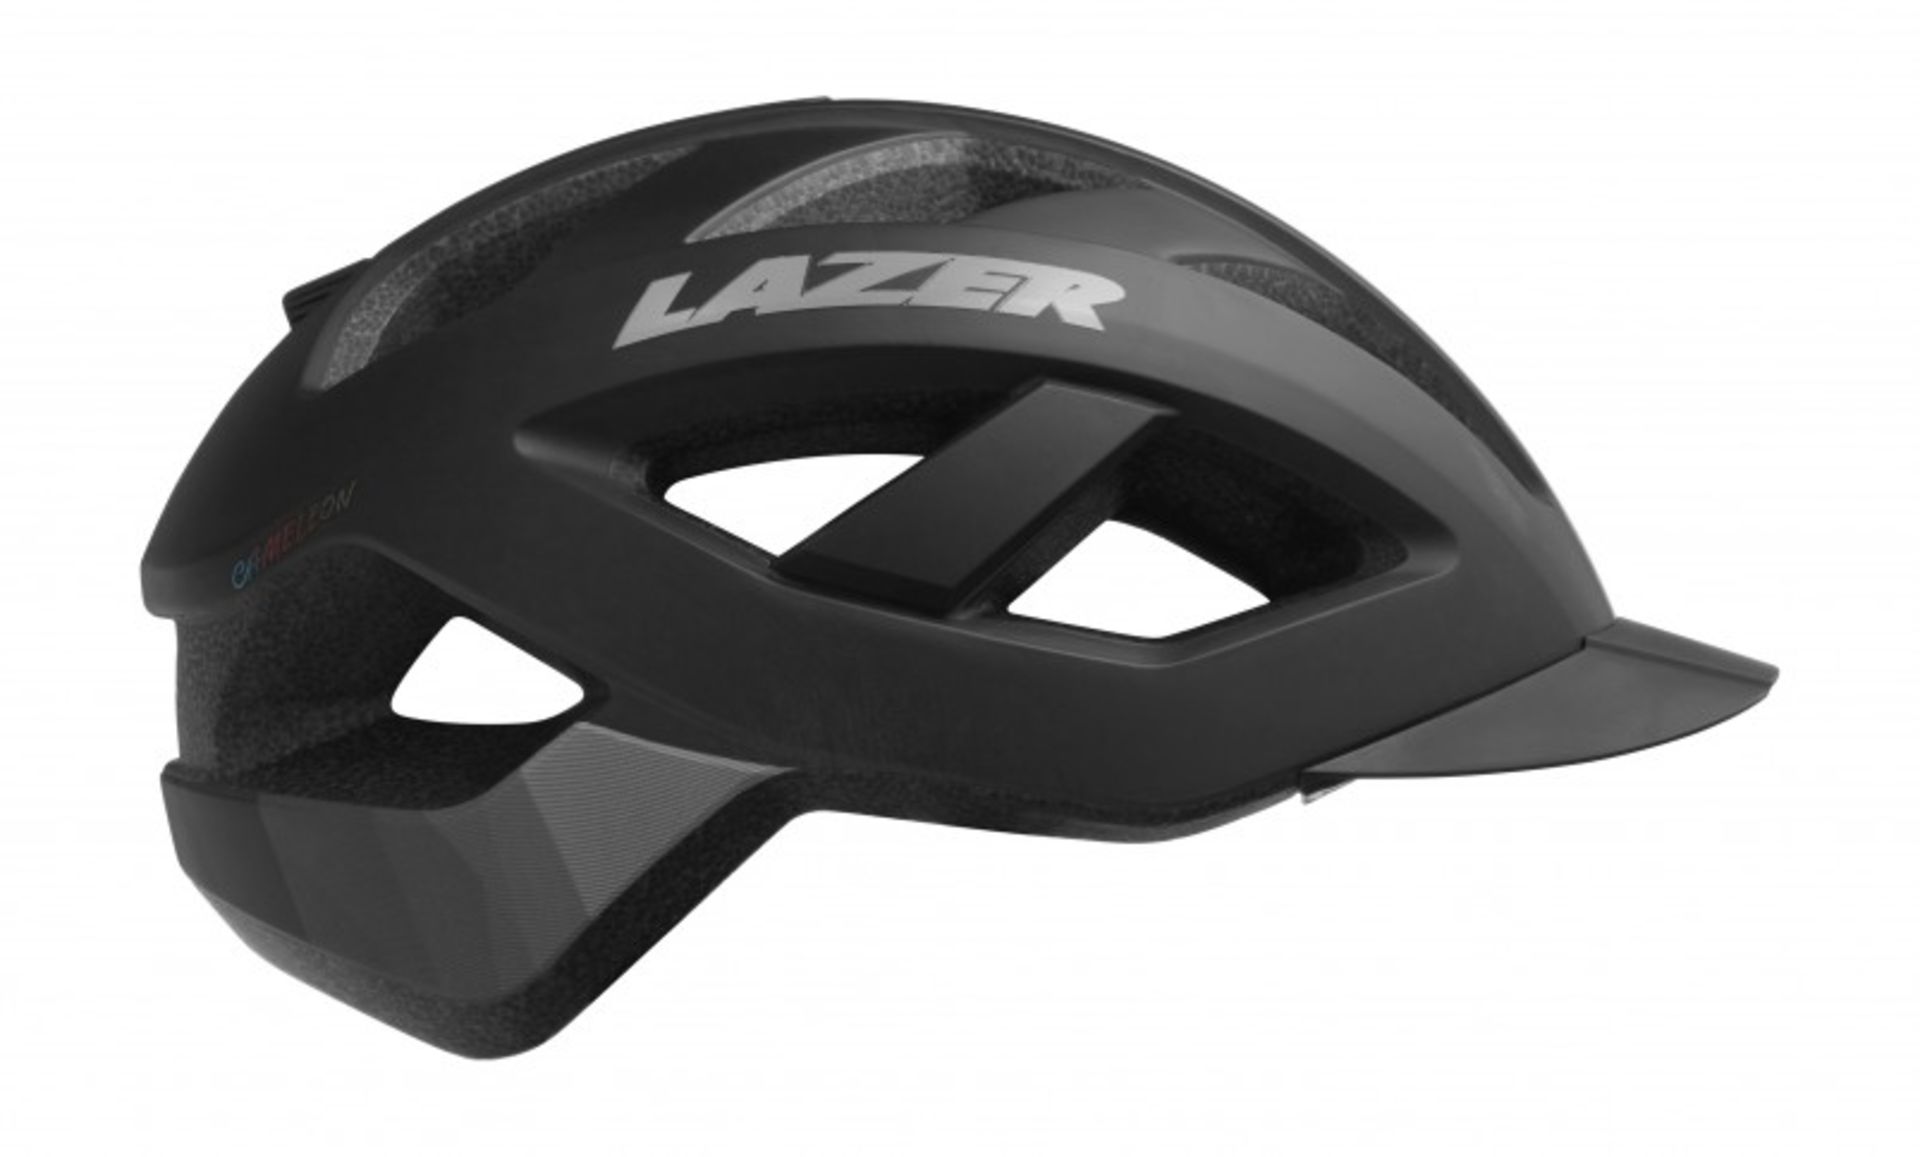 LAZER Cameleon Helmet, Size XL (61-64cm) - Matte Black/Grey